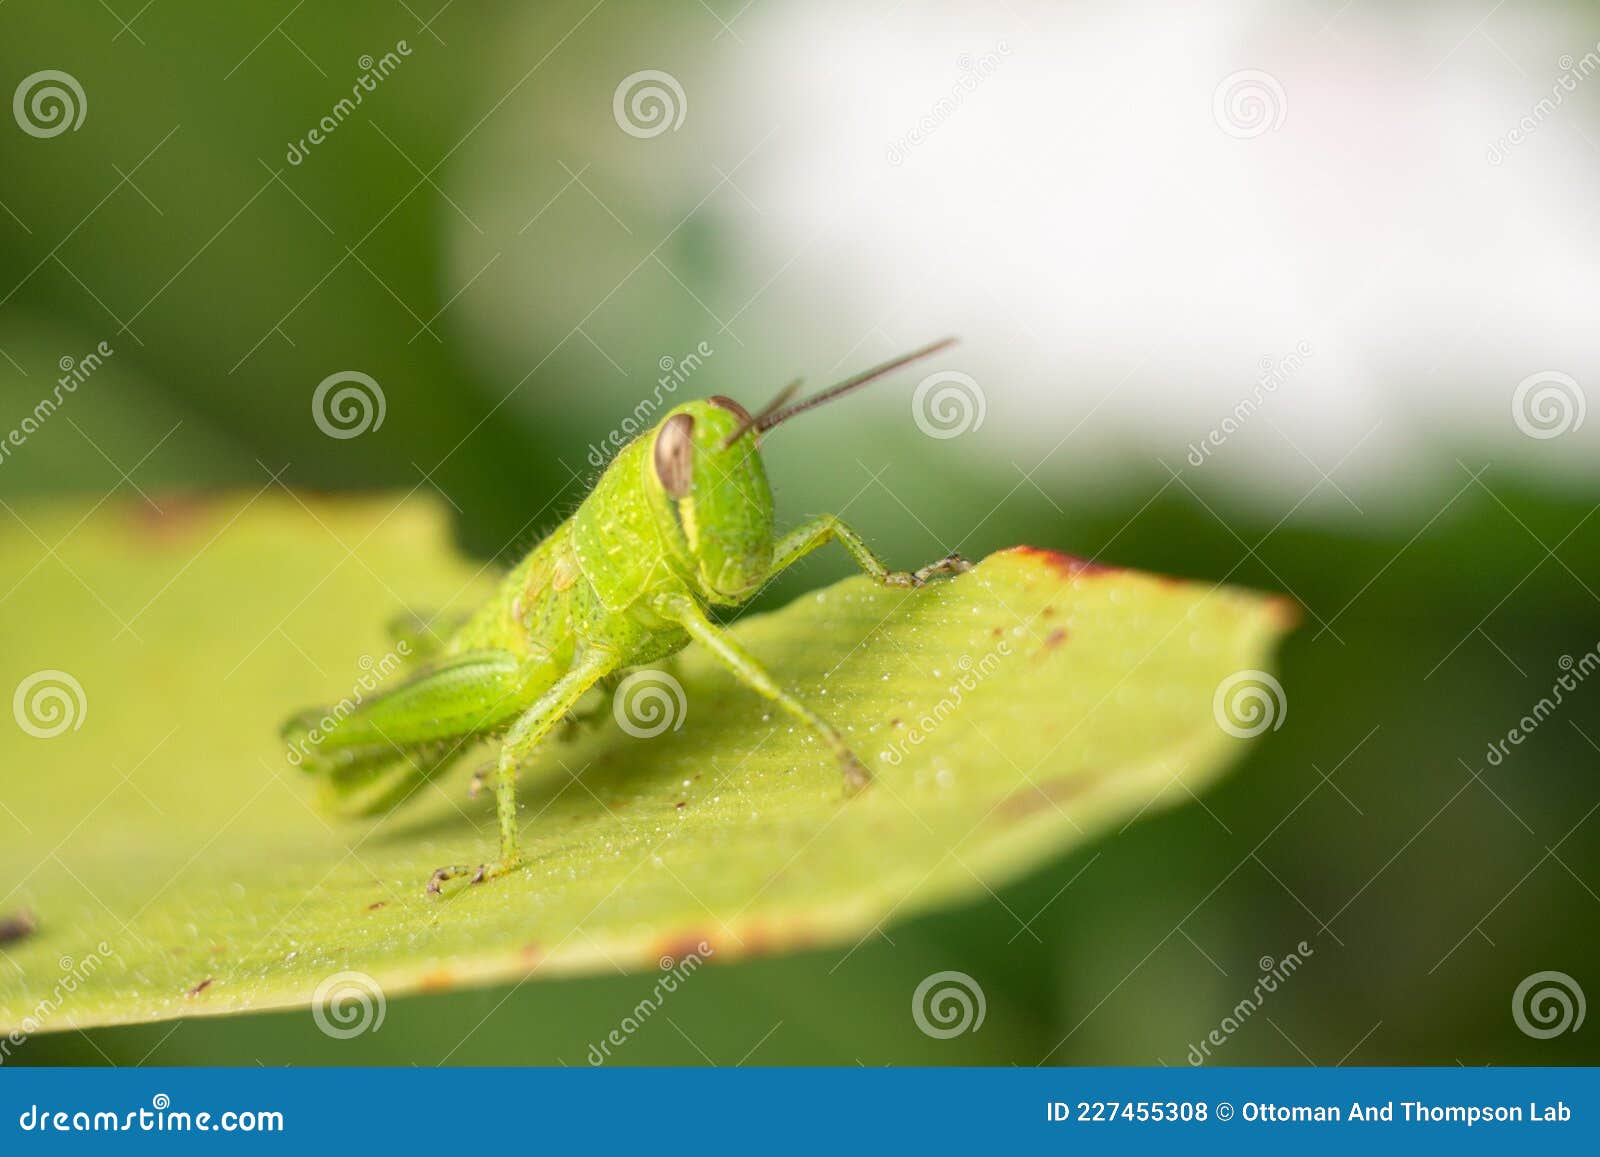 belalang berdiam di atas daun